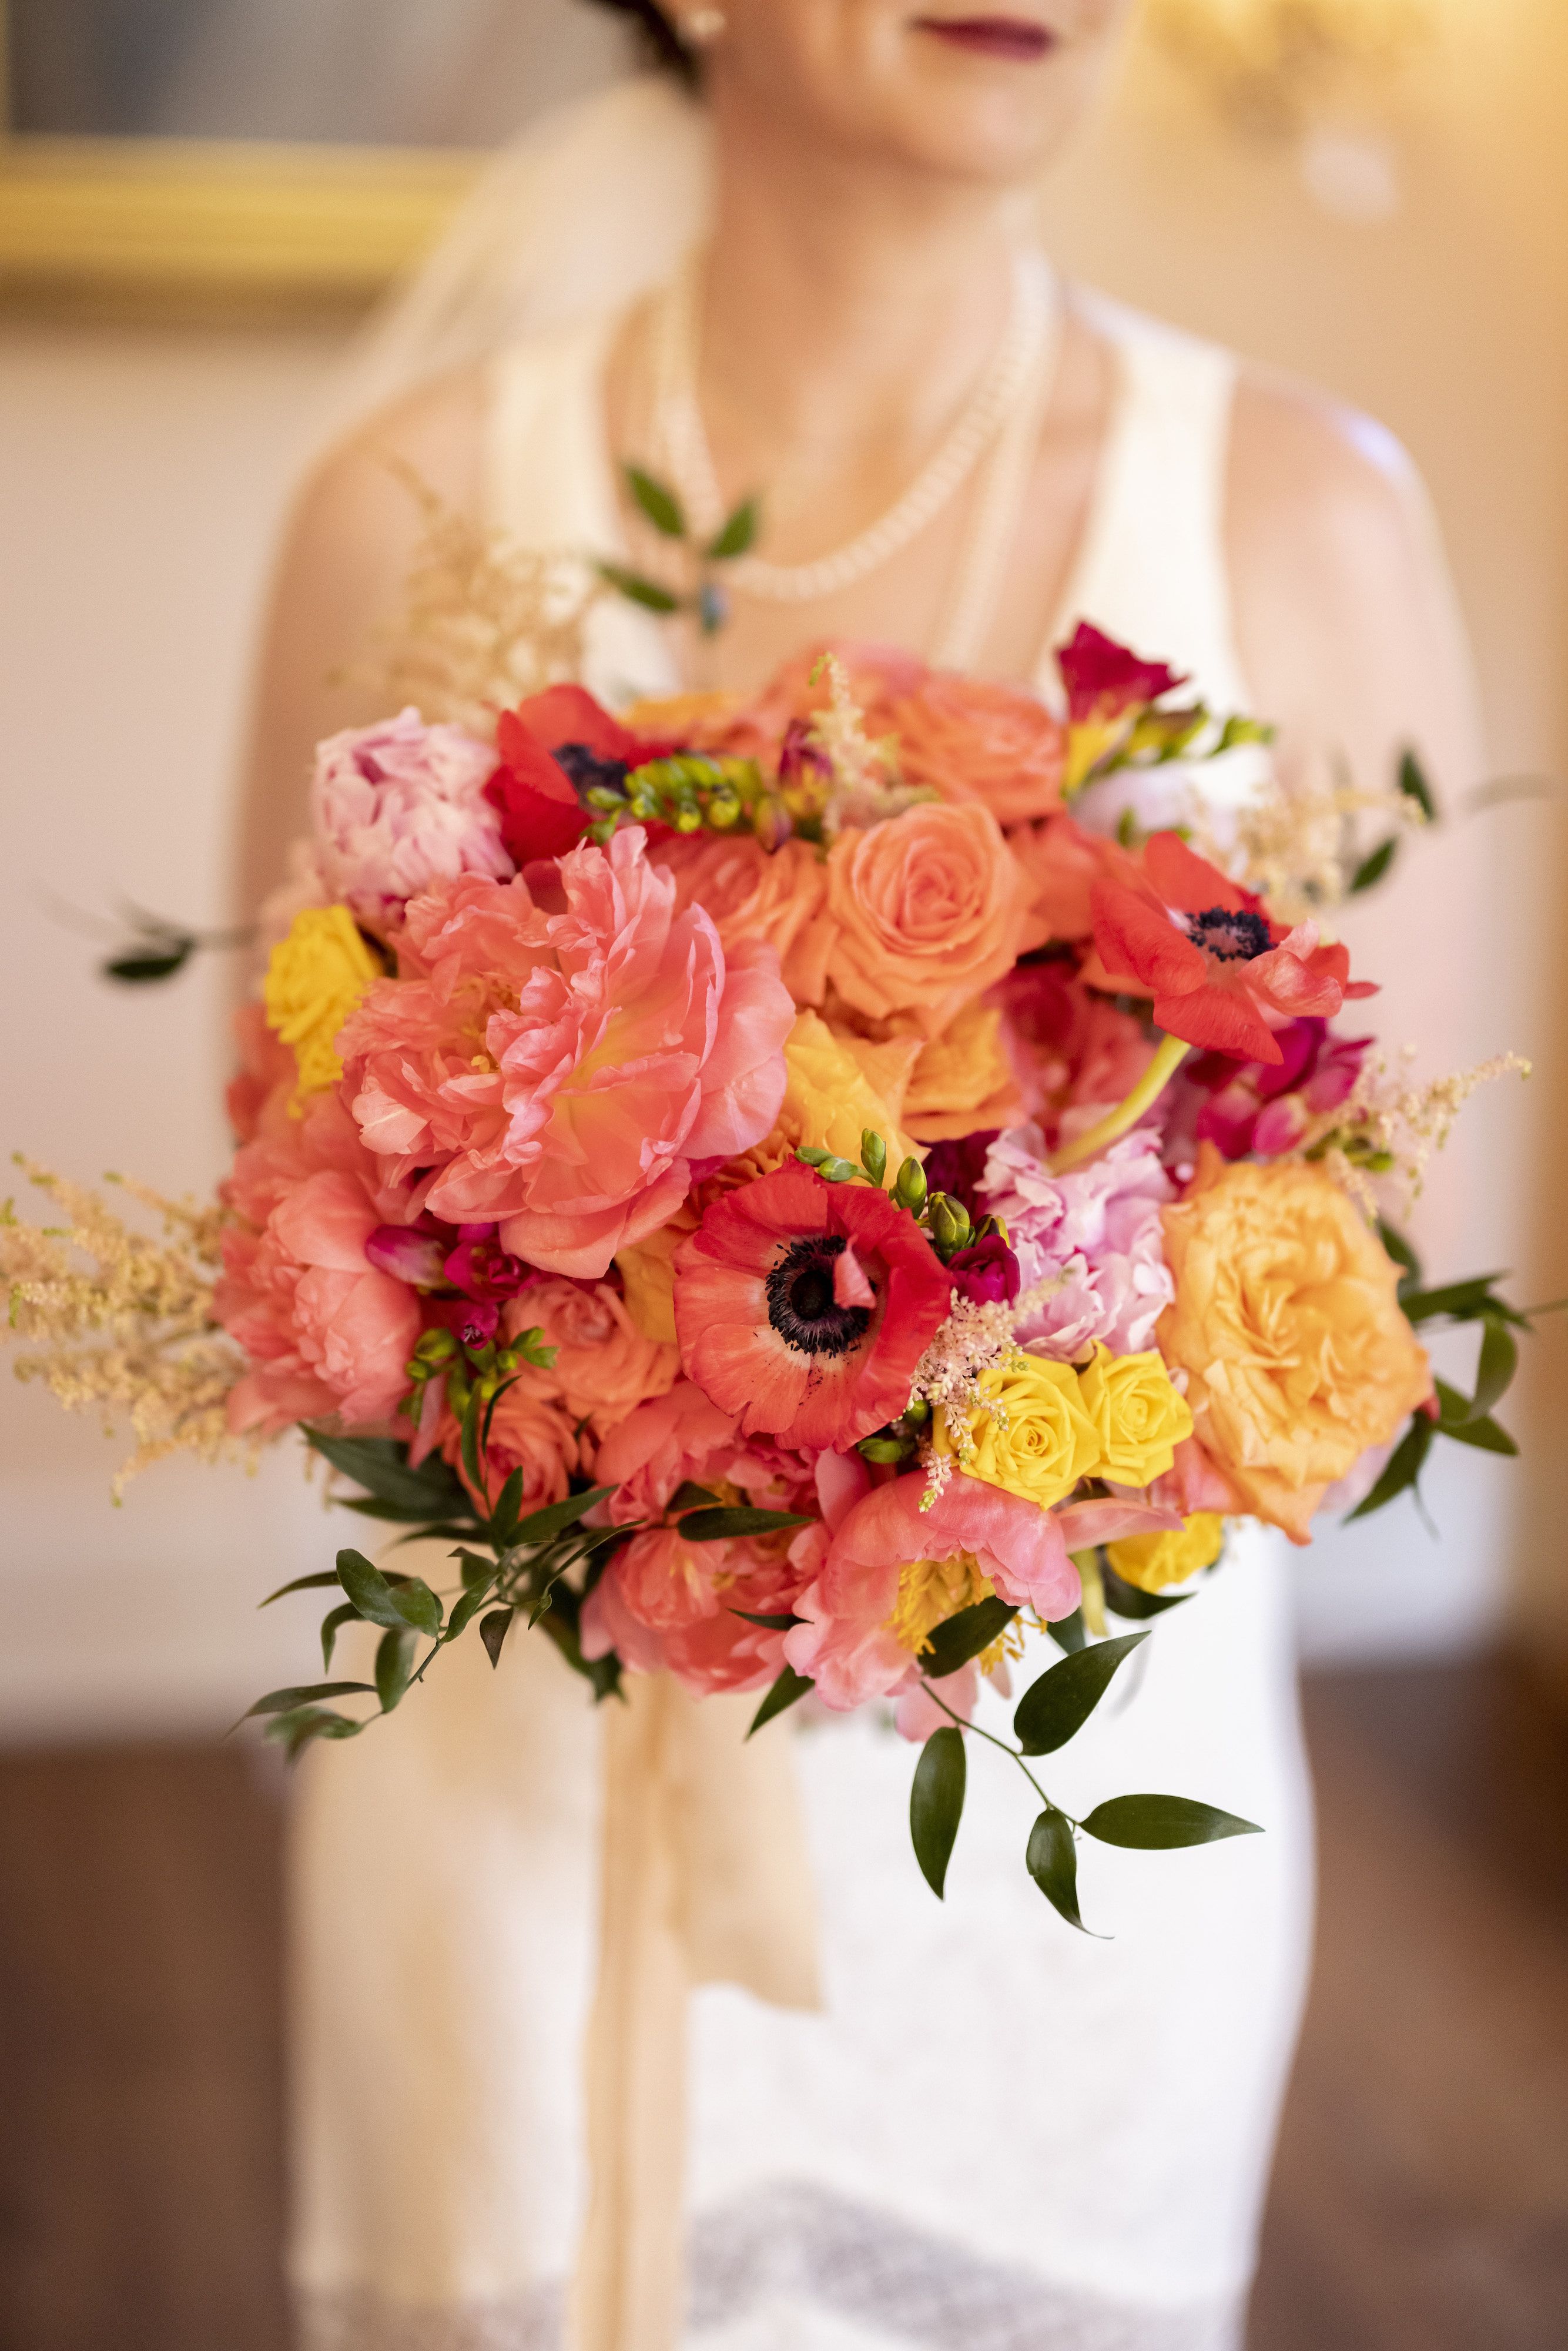 7 Open Roses TAN BROWN Soft Touch Silk Wedding Bouquet Flowers Centerpieces 